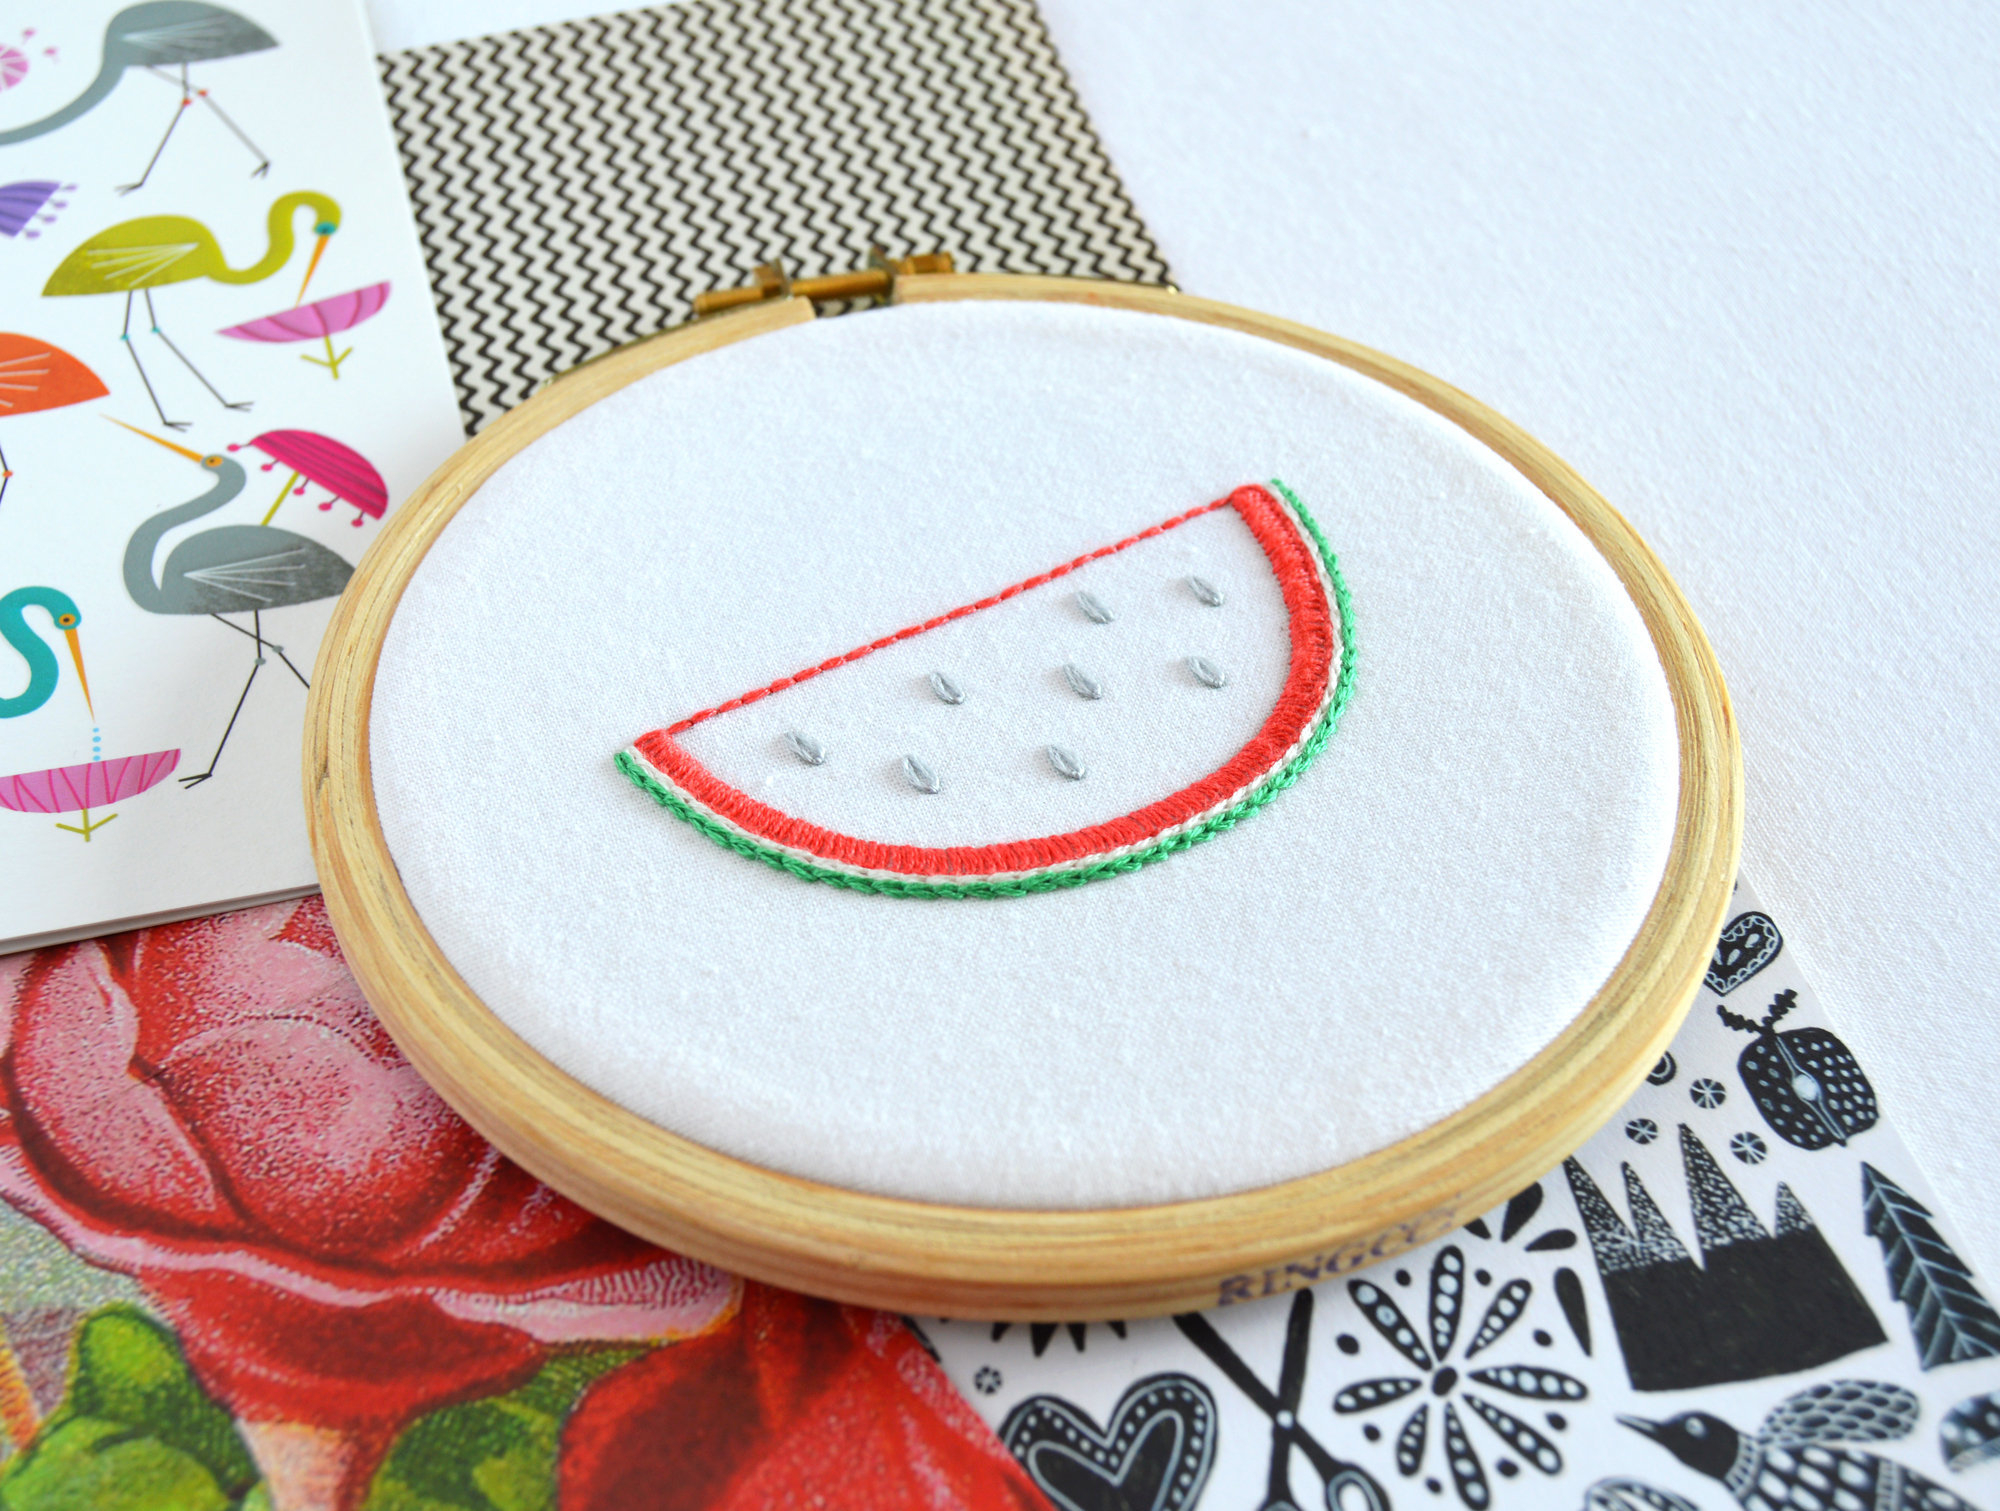 Hand Embroidery Sampler Patterns Watermelon Sampler Hand Embroidery Pattern An Embroidery Sampler Pdf Pattern